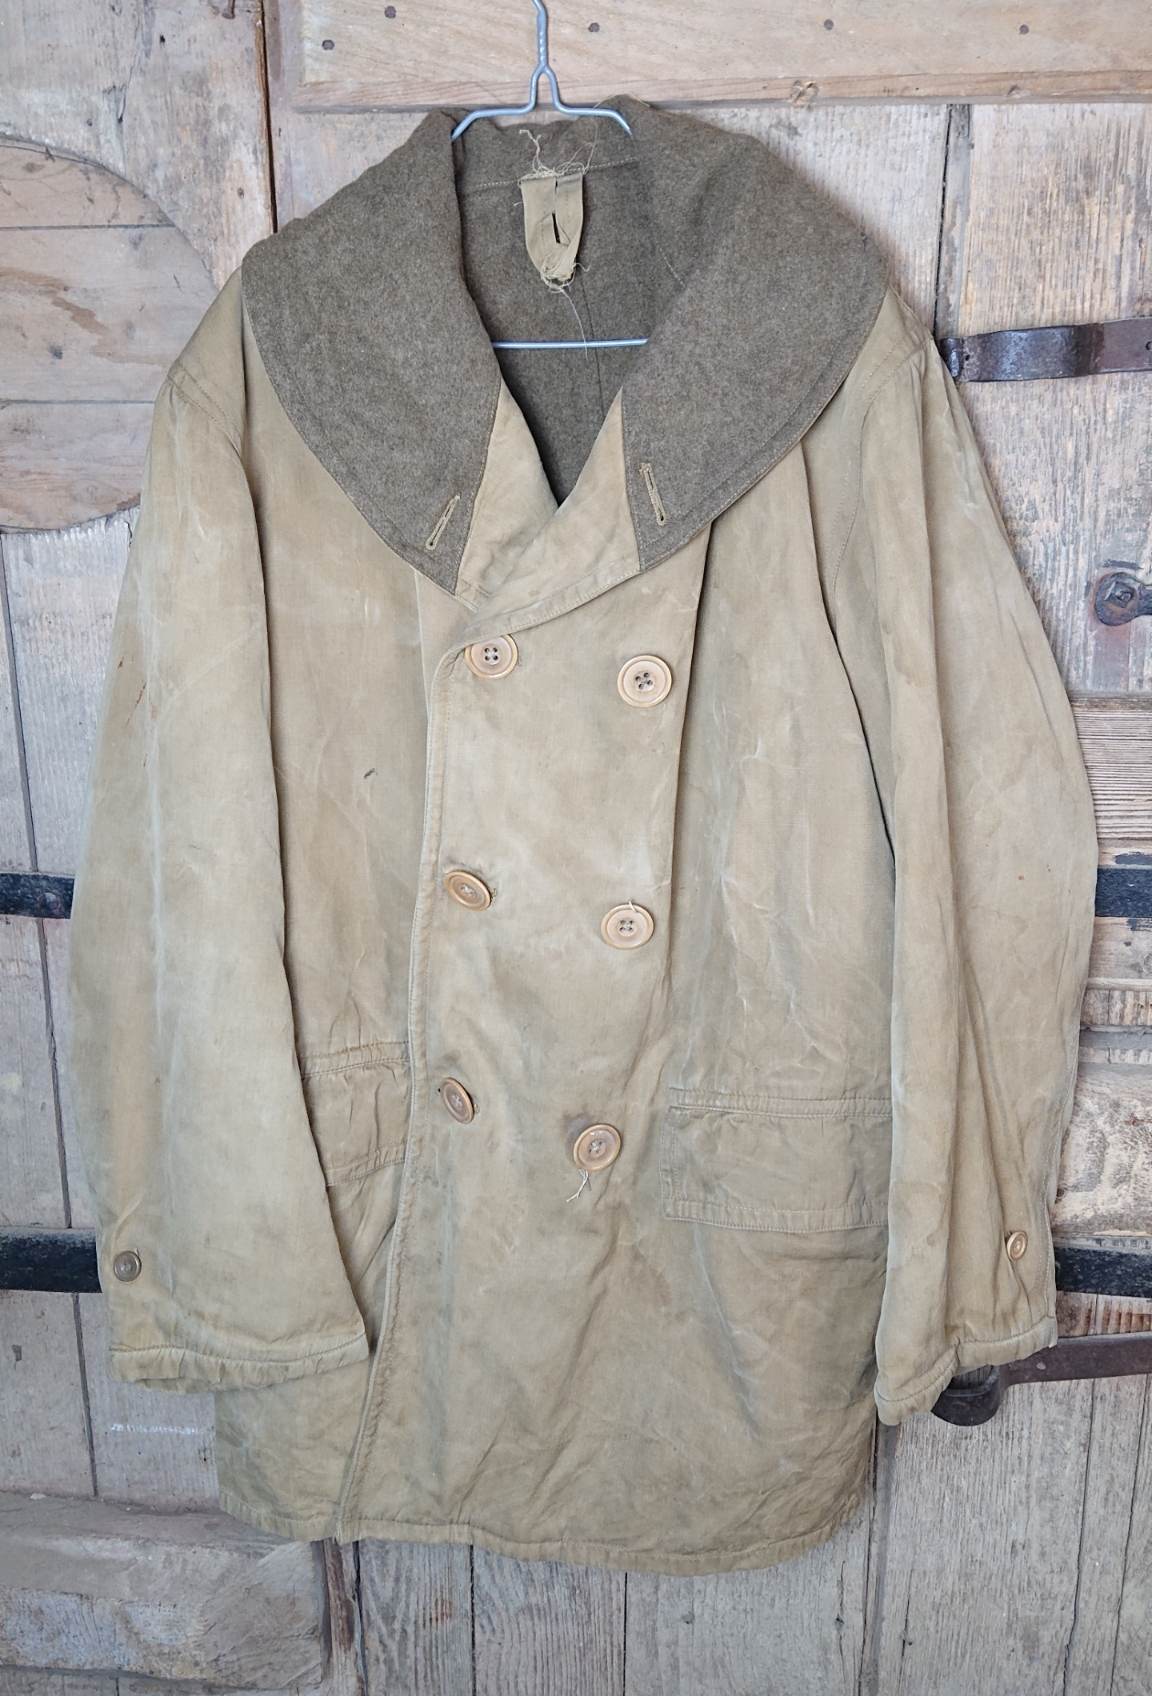 HdS Militaria Veste Mackinaw US ww2 British made / Mackinaw jacket US 1943